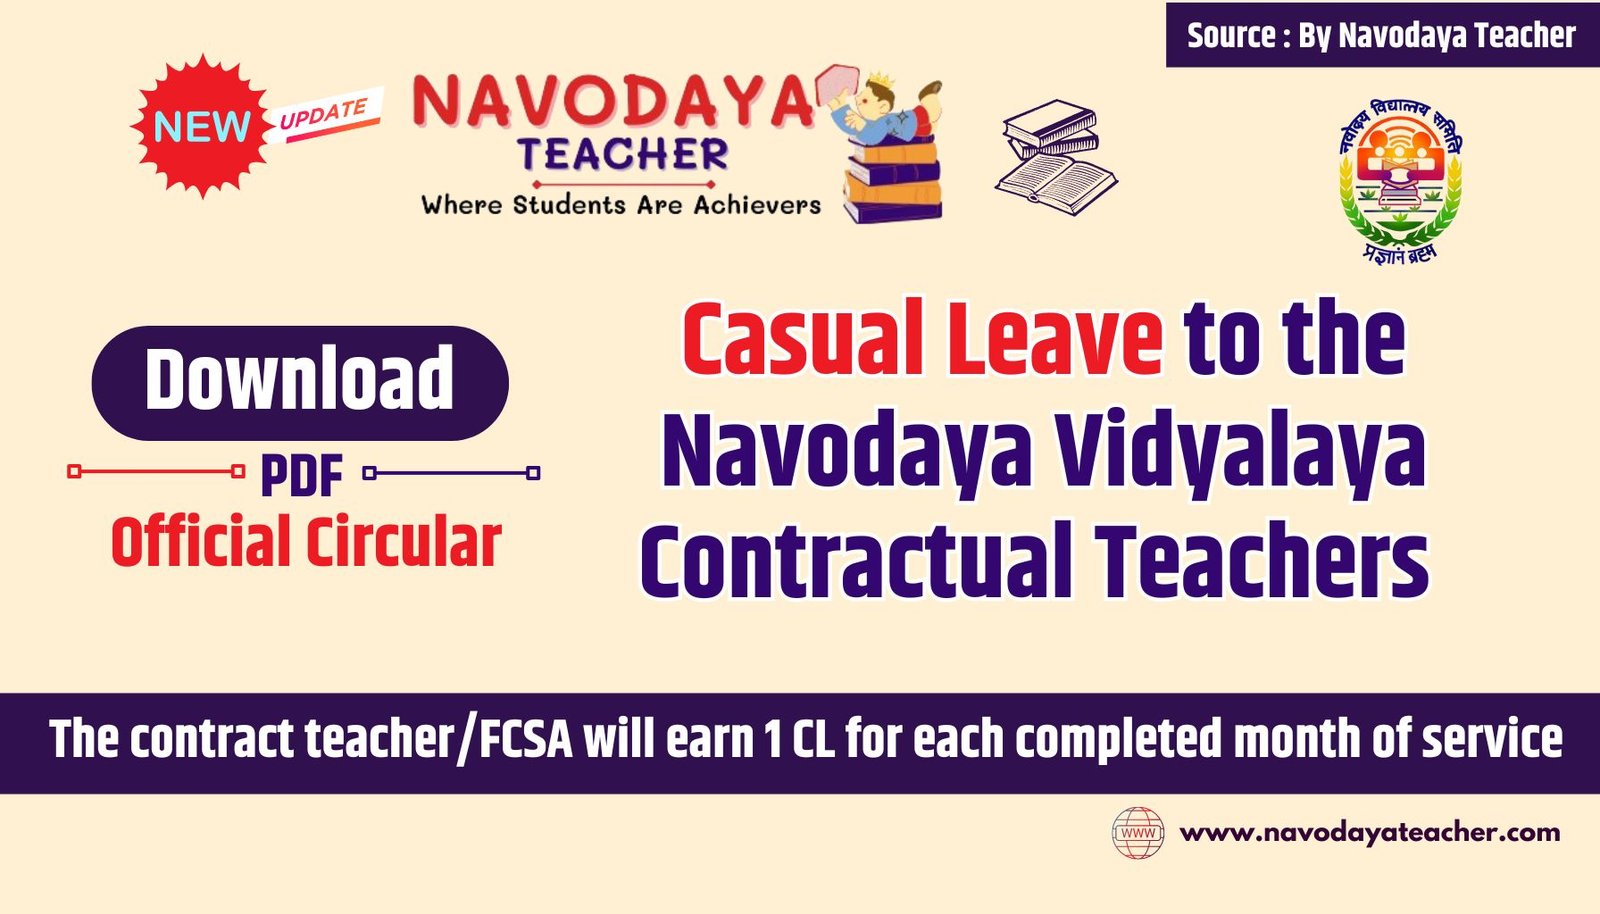 Casual Leave to the Navodaya Vidyalaya Contractual Teachers